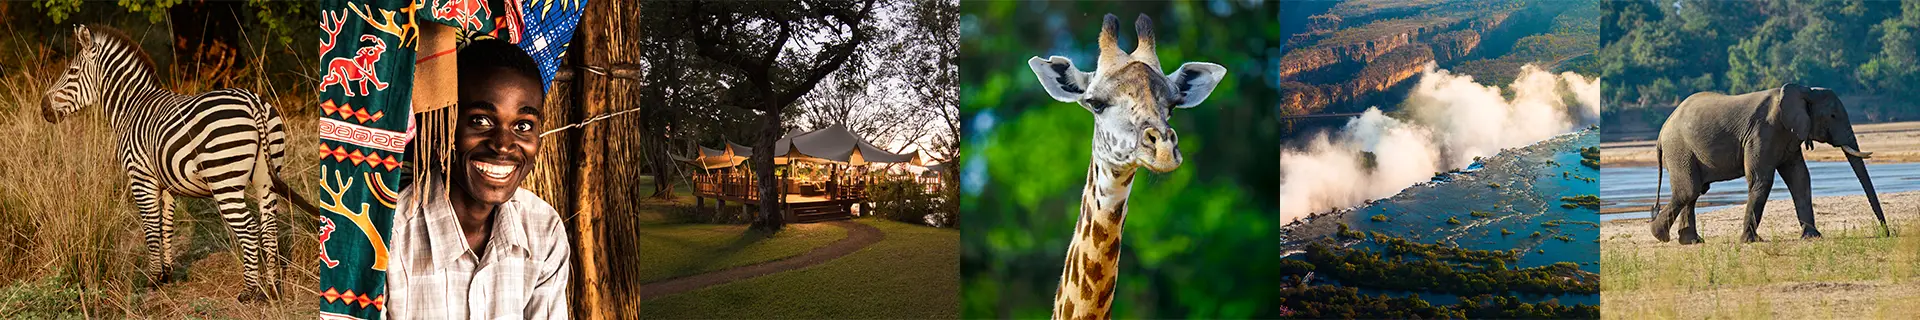 Explore-Zambia-Private-Guided-Safaris-Review-Explore-Africa-Travel